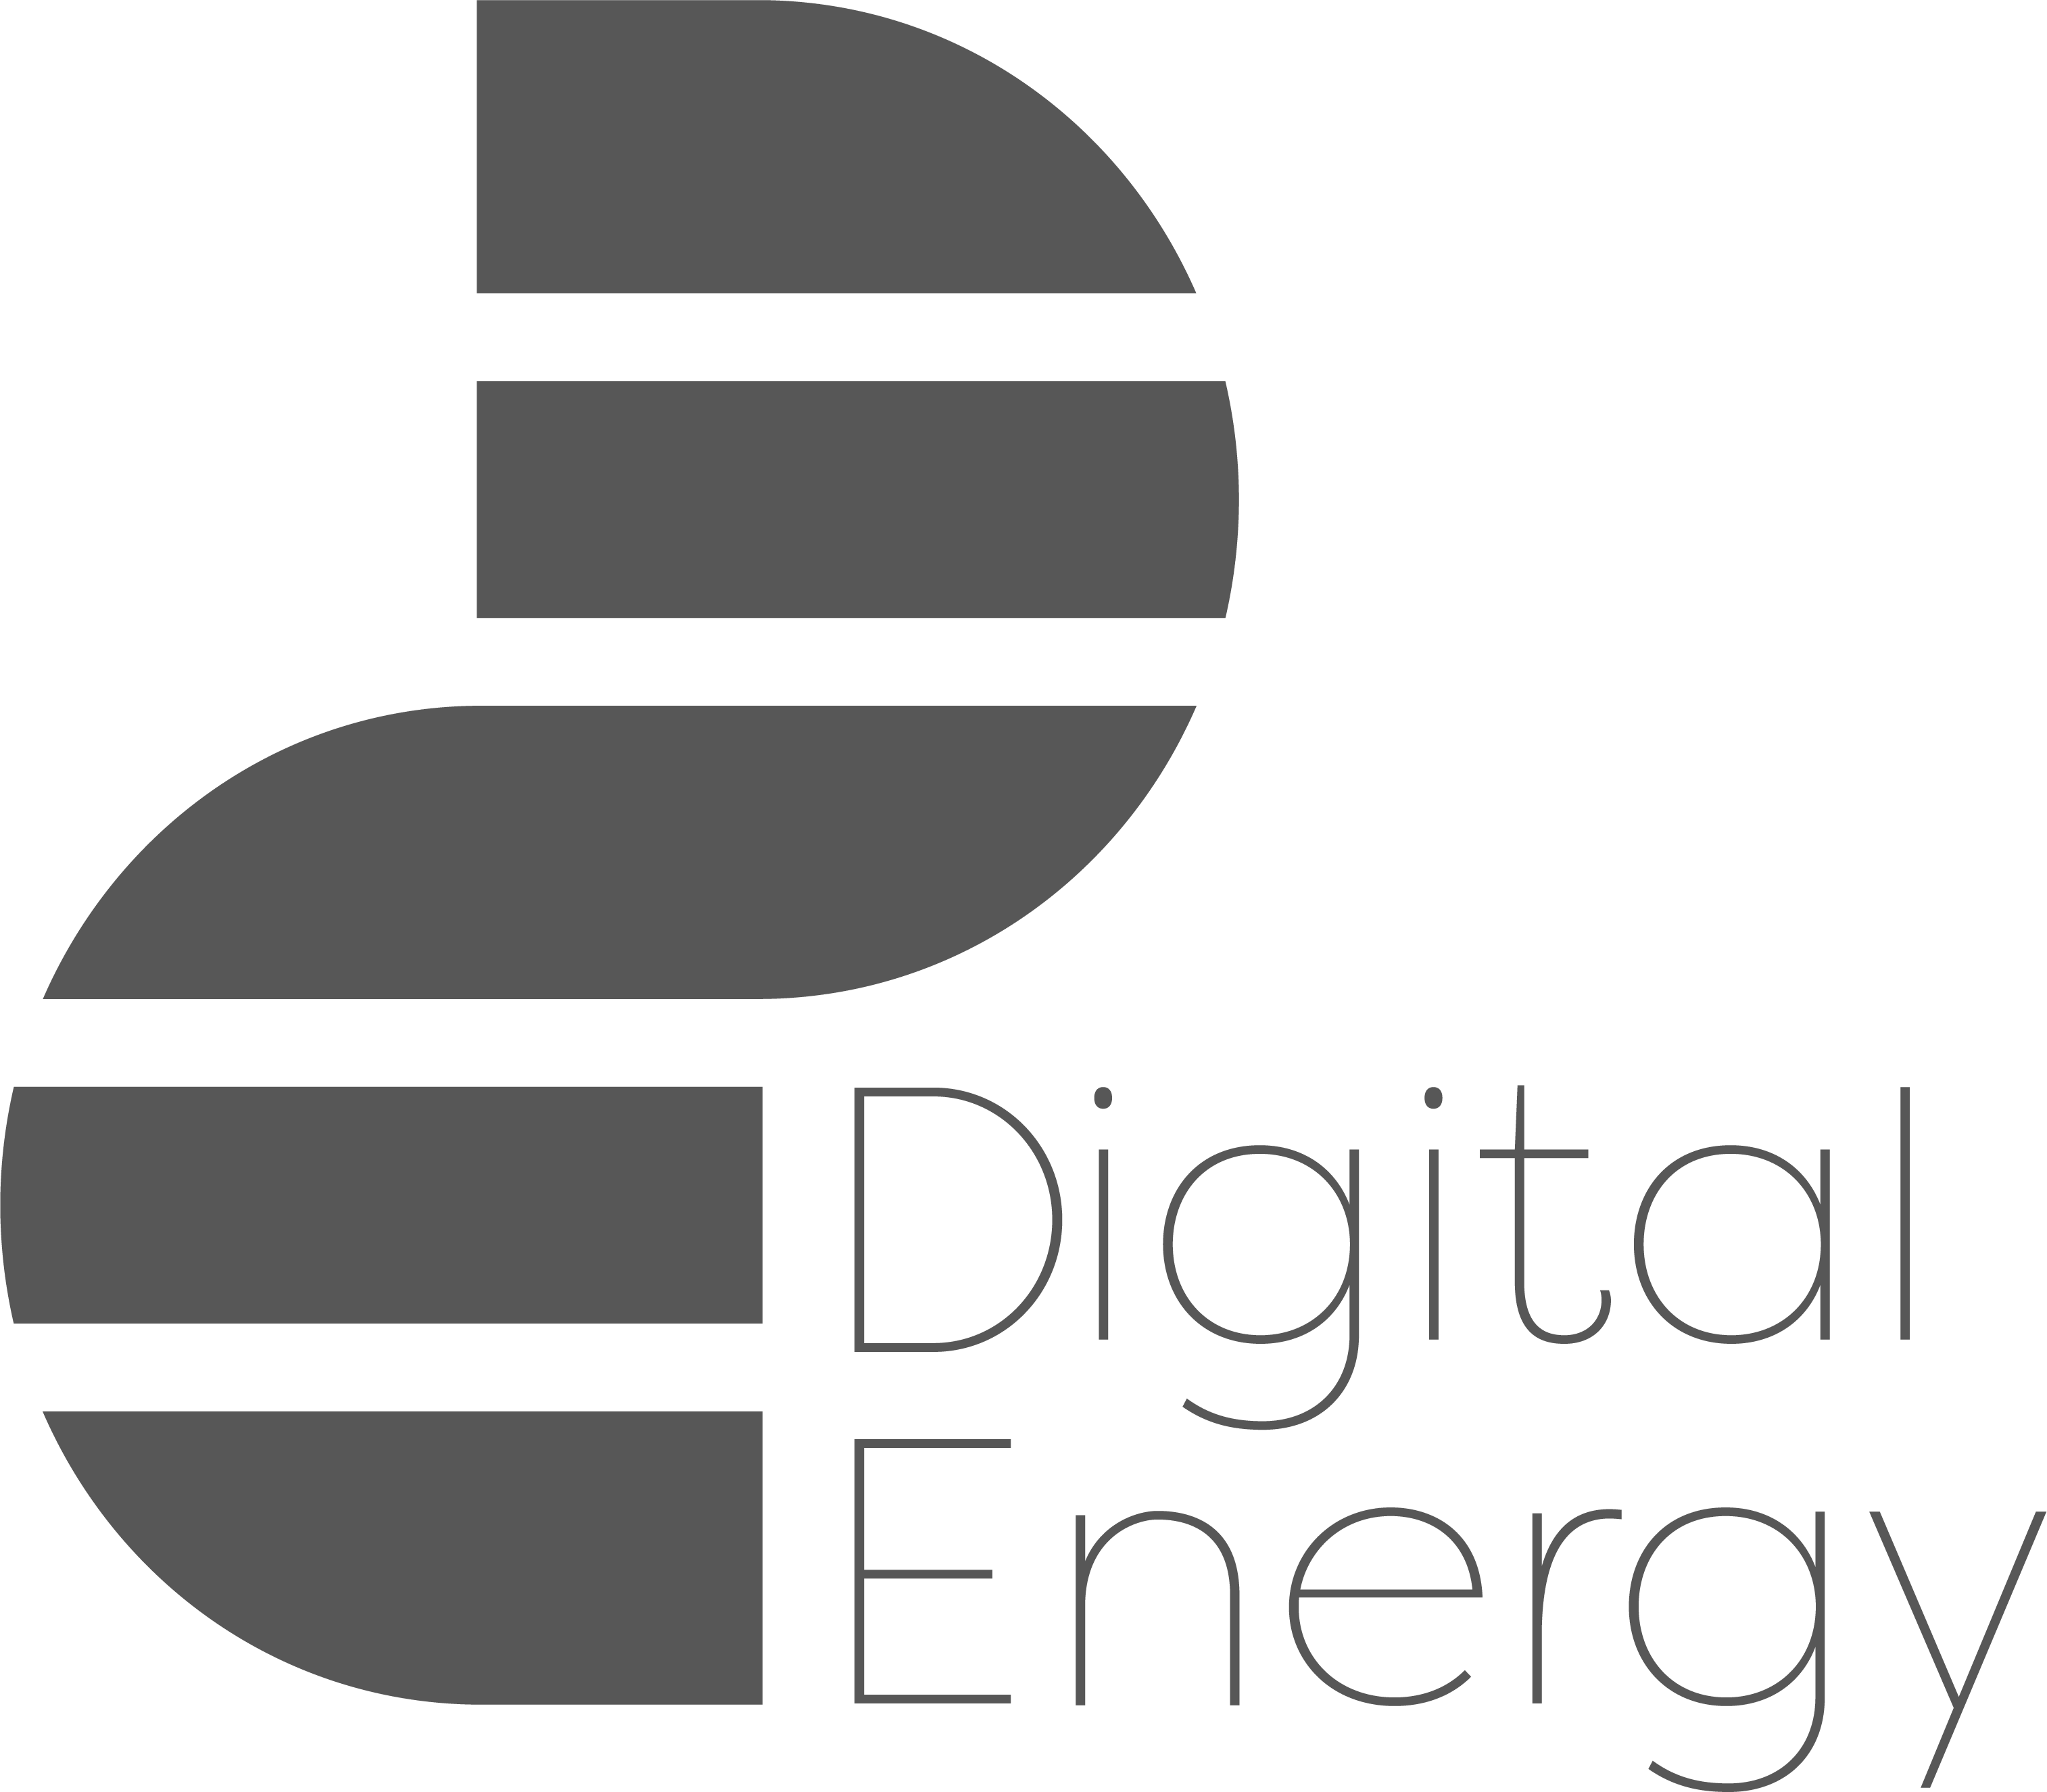 Digital Energy